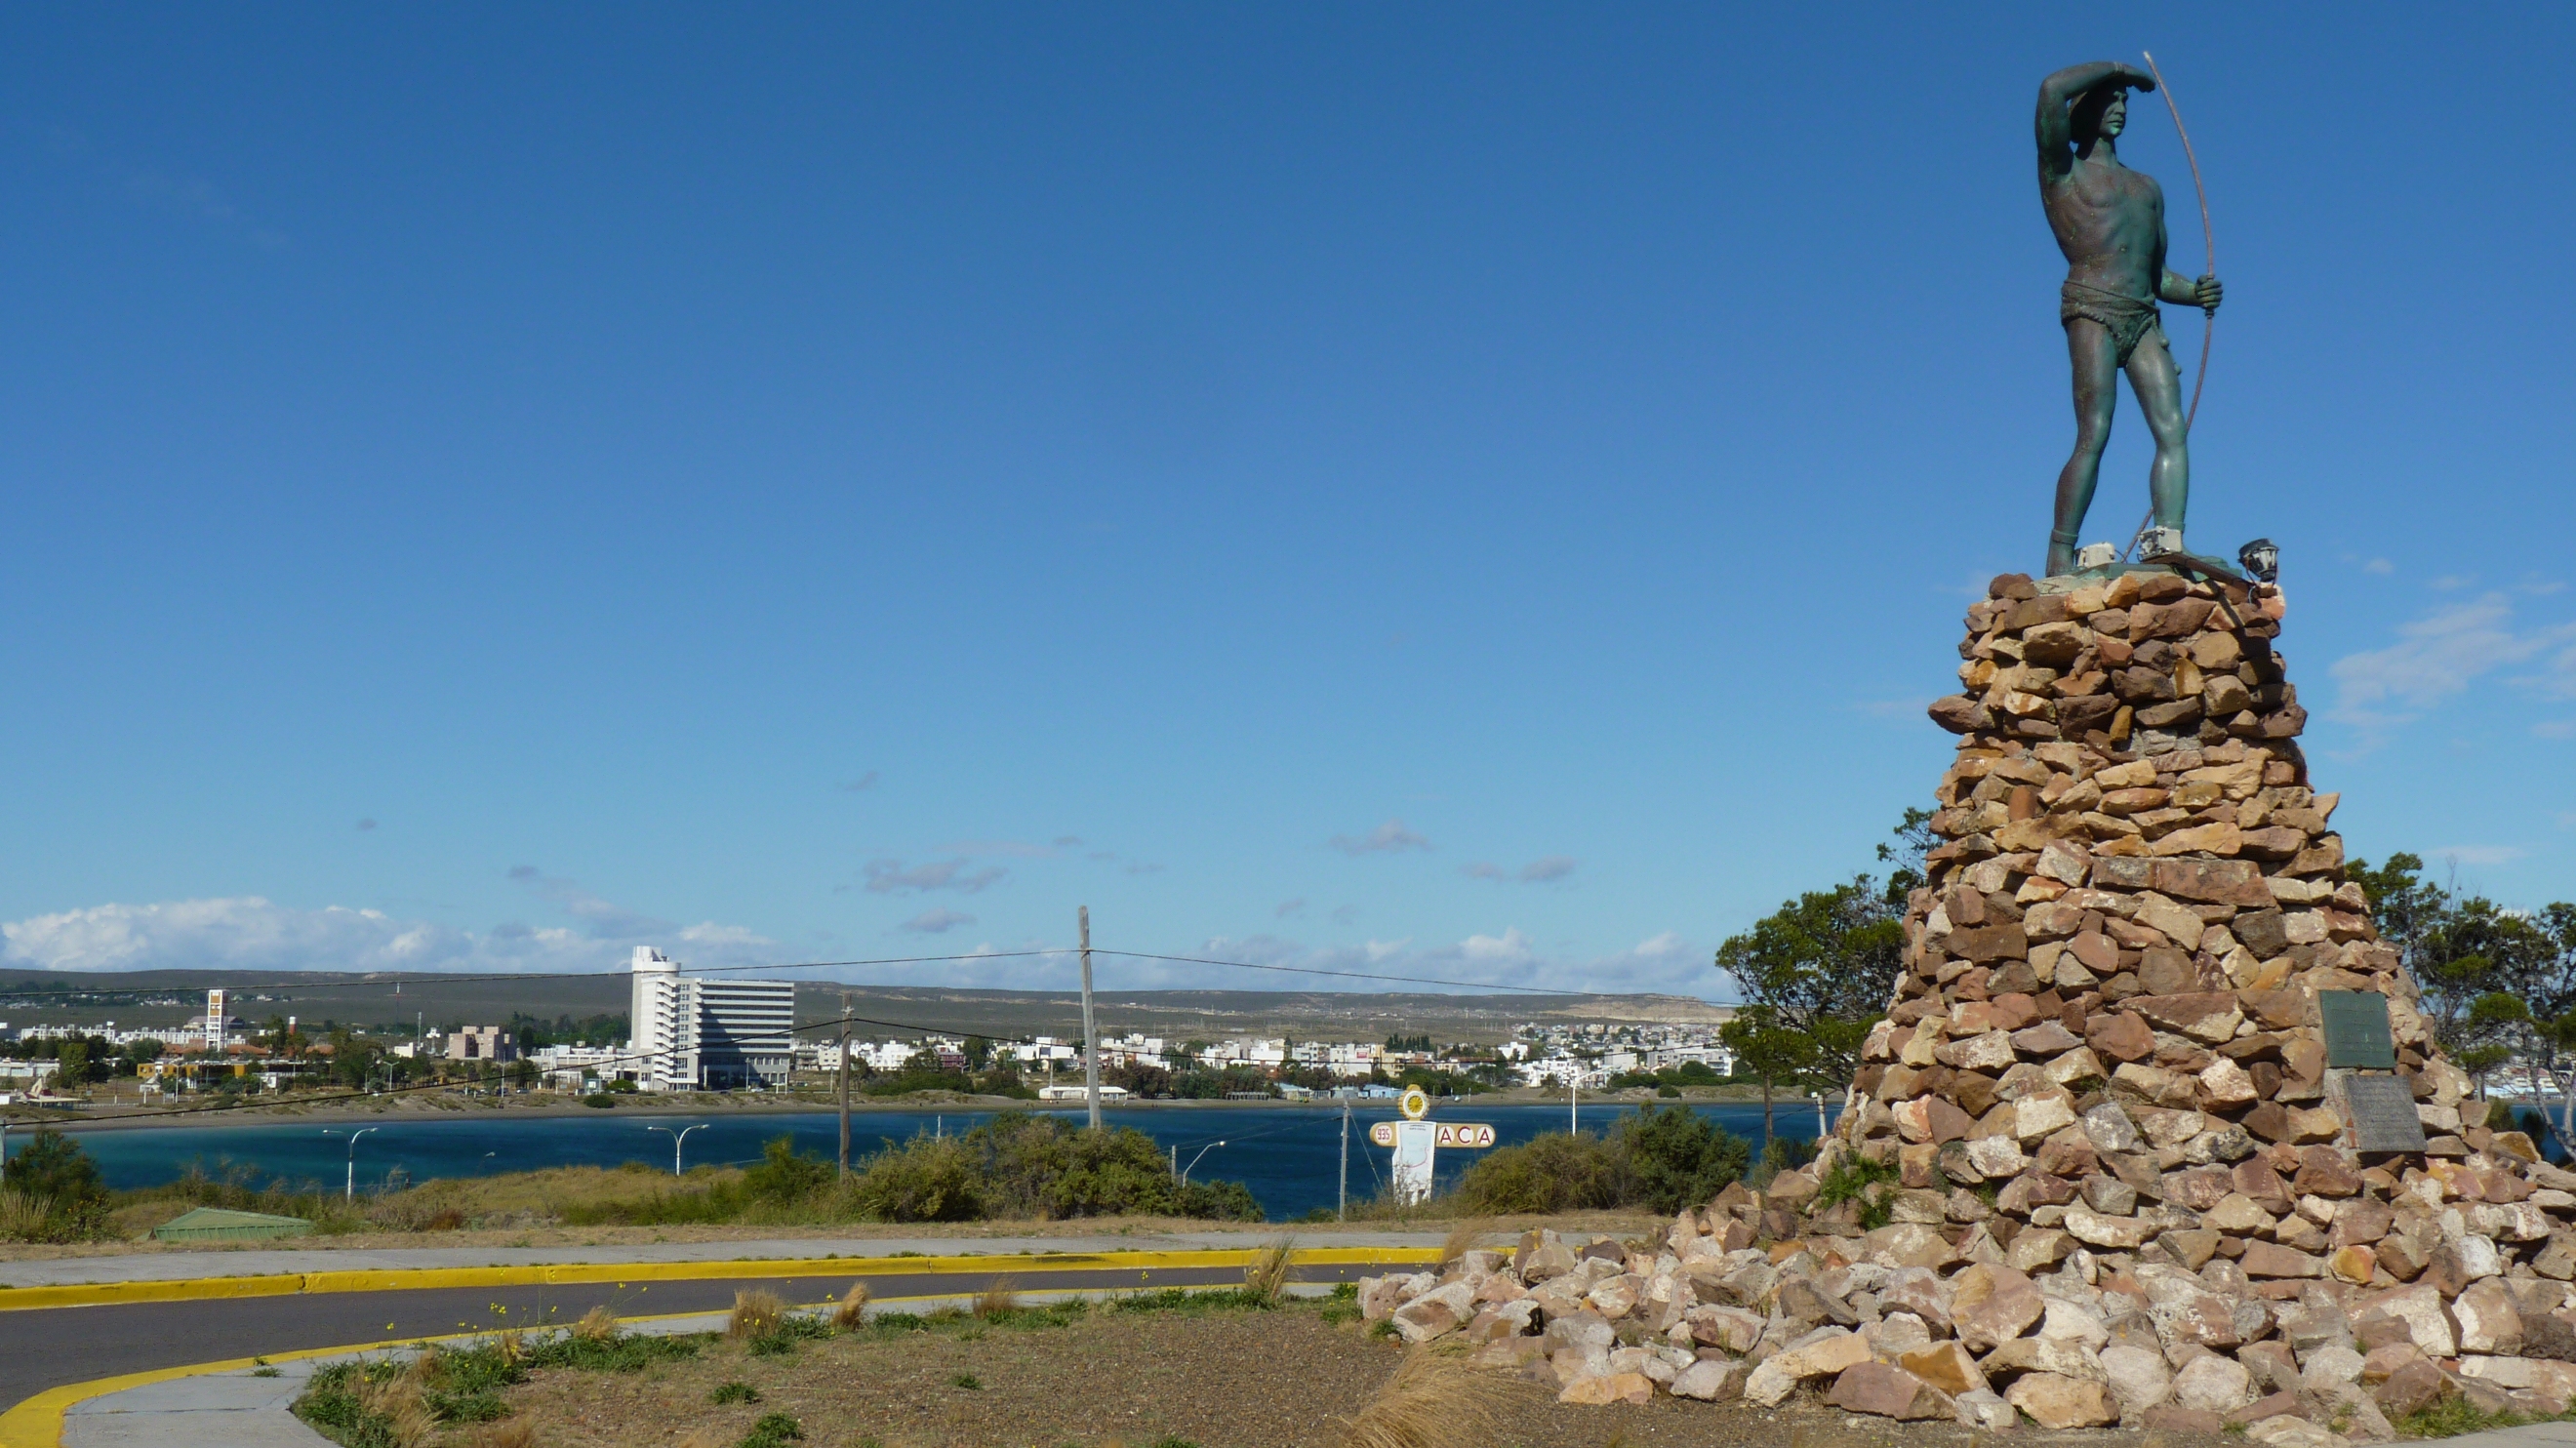 Foto: Monumento al indio tehuelche. - Puerto Madryn (Chubut), Argentina